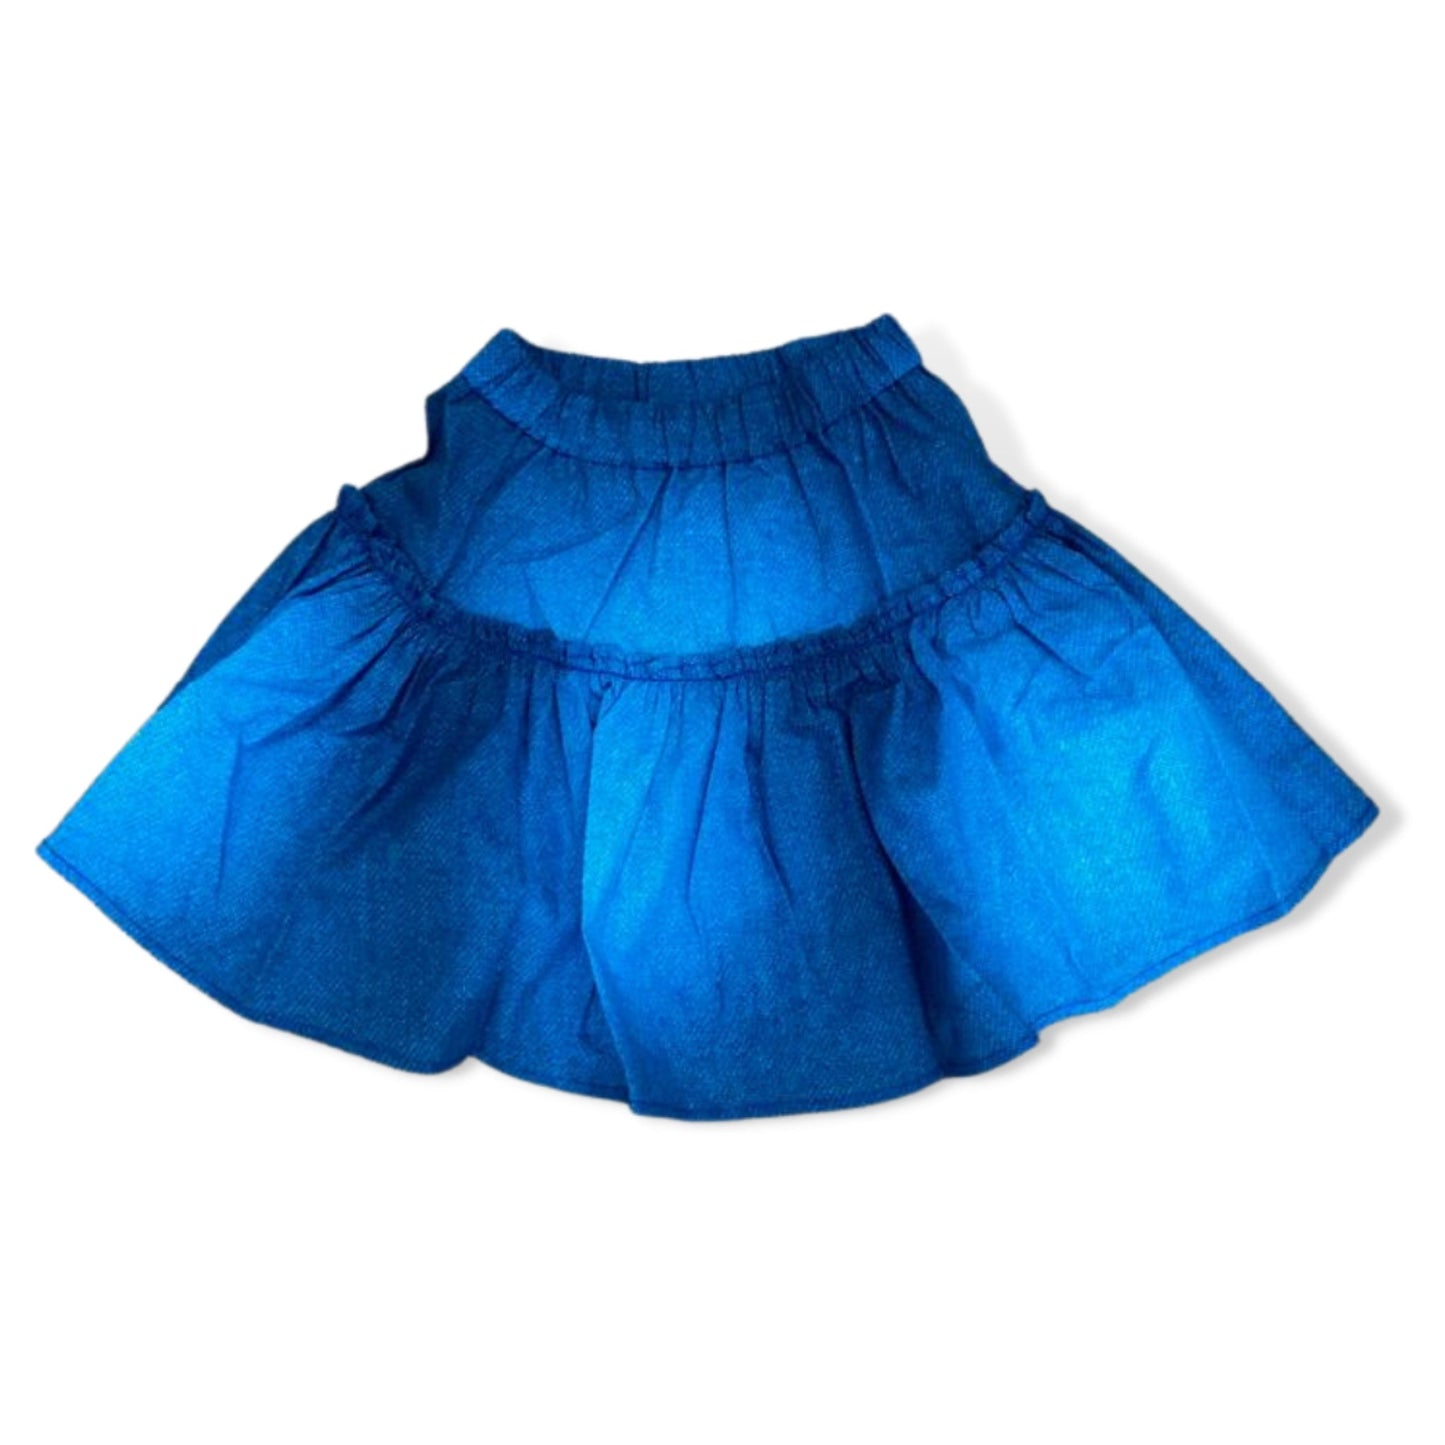 Theme Vintage Blue Jean The Drew Mini Skirt - a Spirit Animal - Mini Skirt $60-$90 active August 2023 Apparel